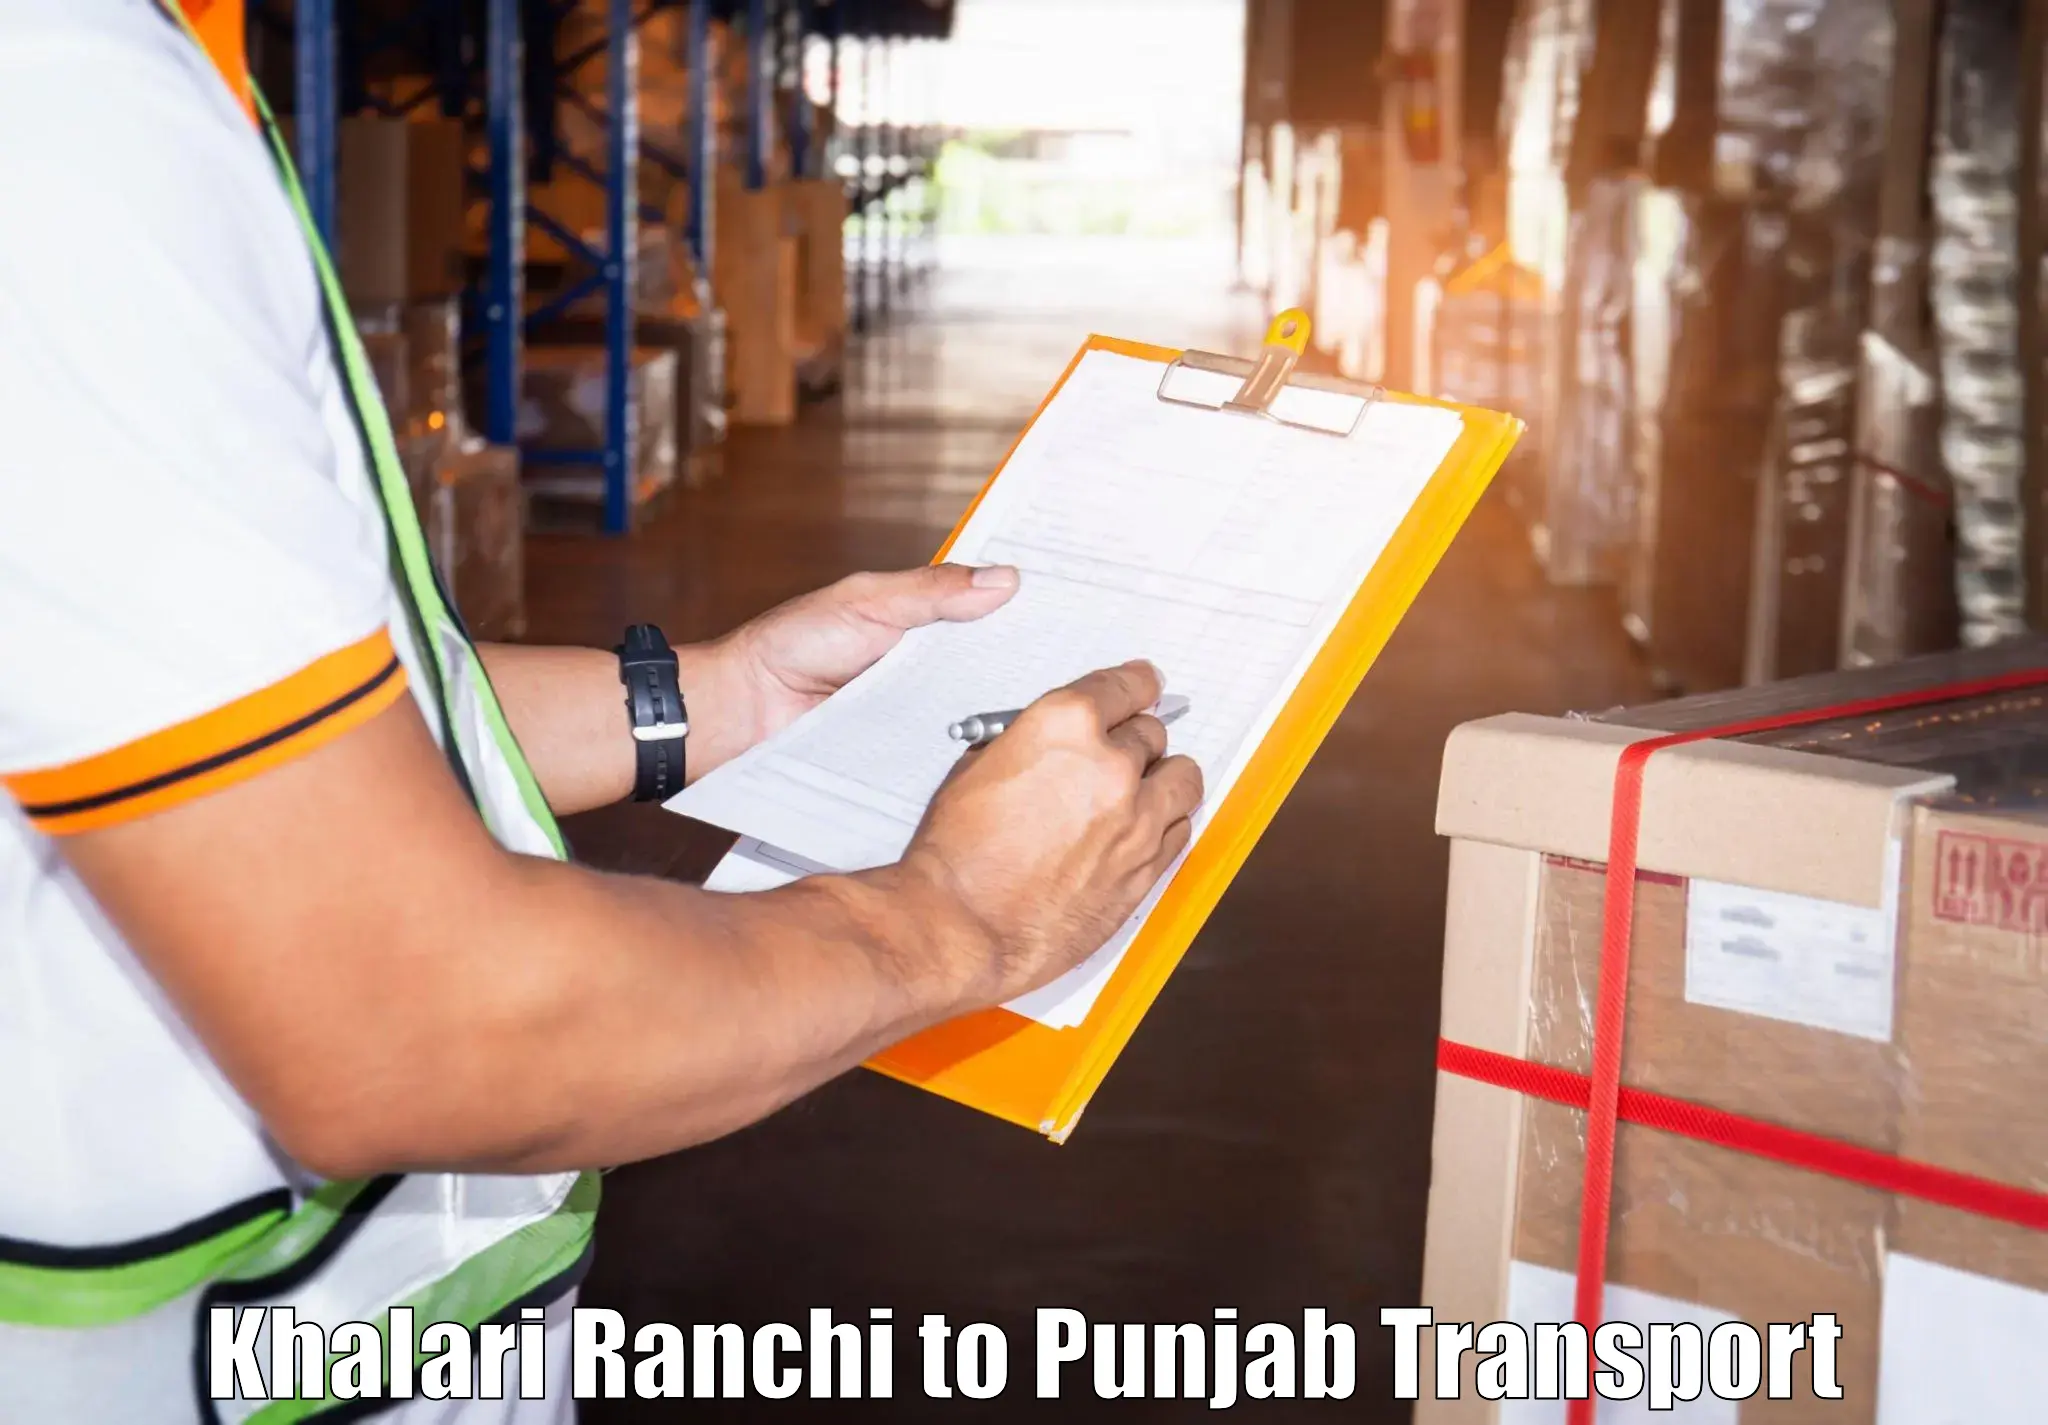 Truck transport companies in India Khalari Ranchi to Patiala